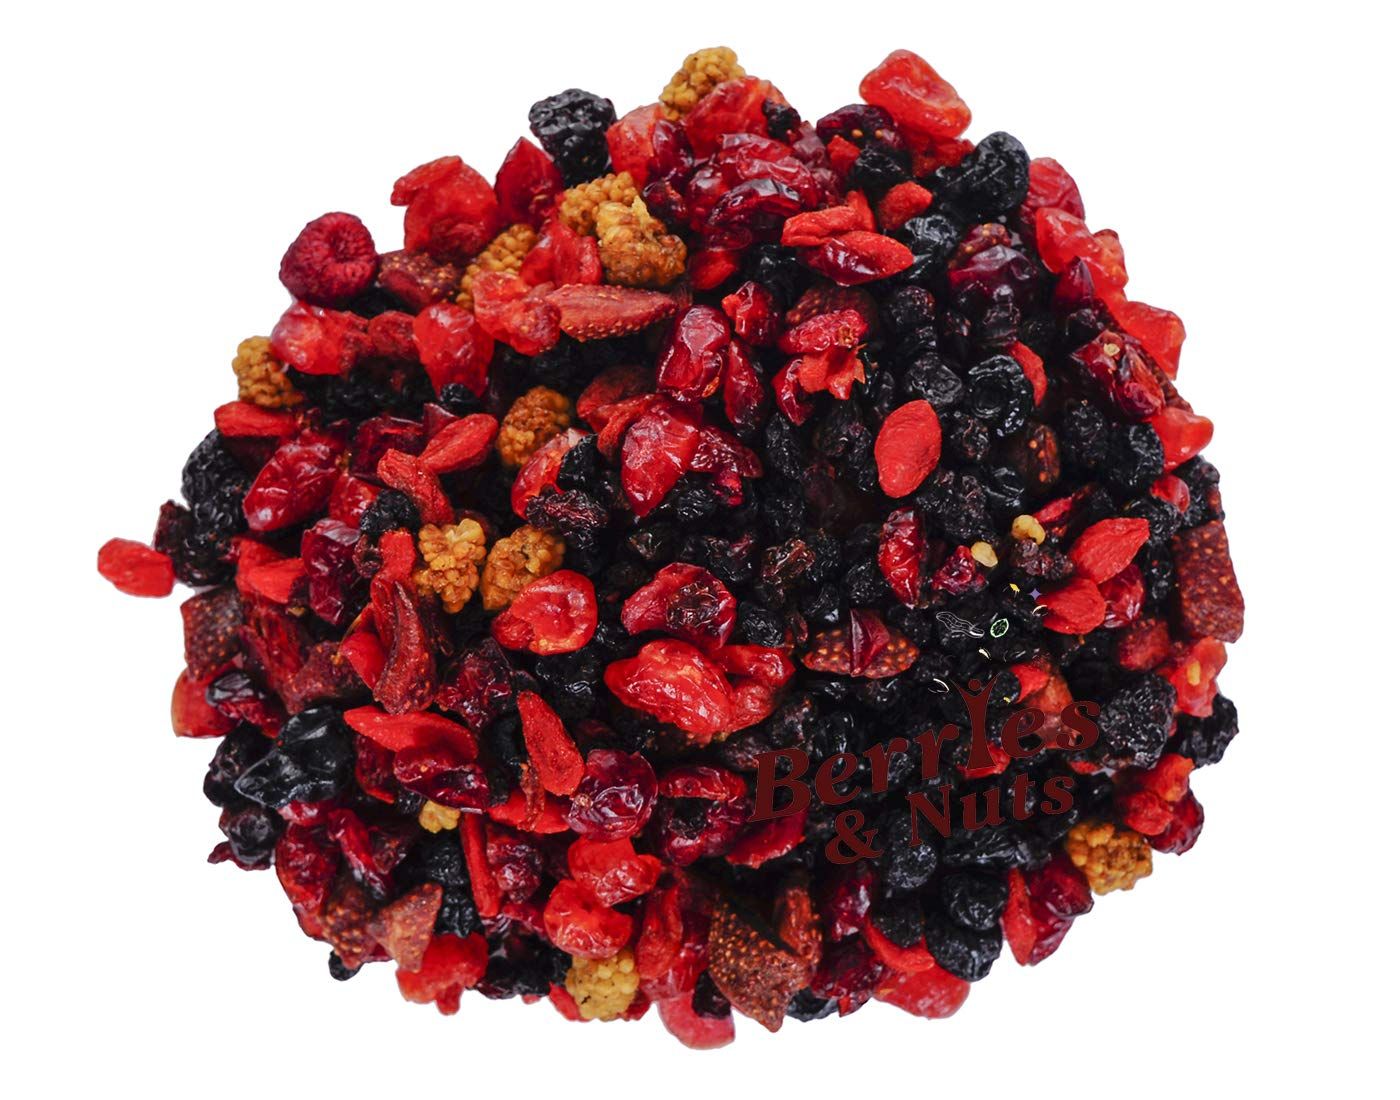 Berries & Nuts Super Berries Mix Image